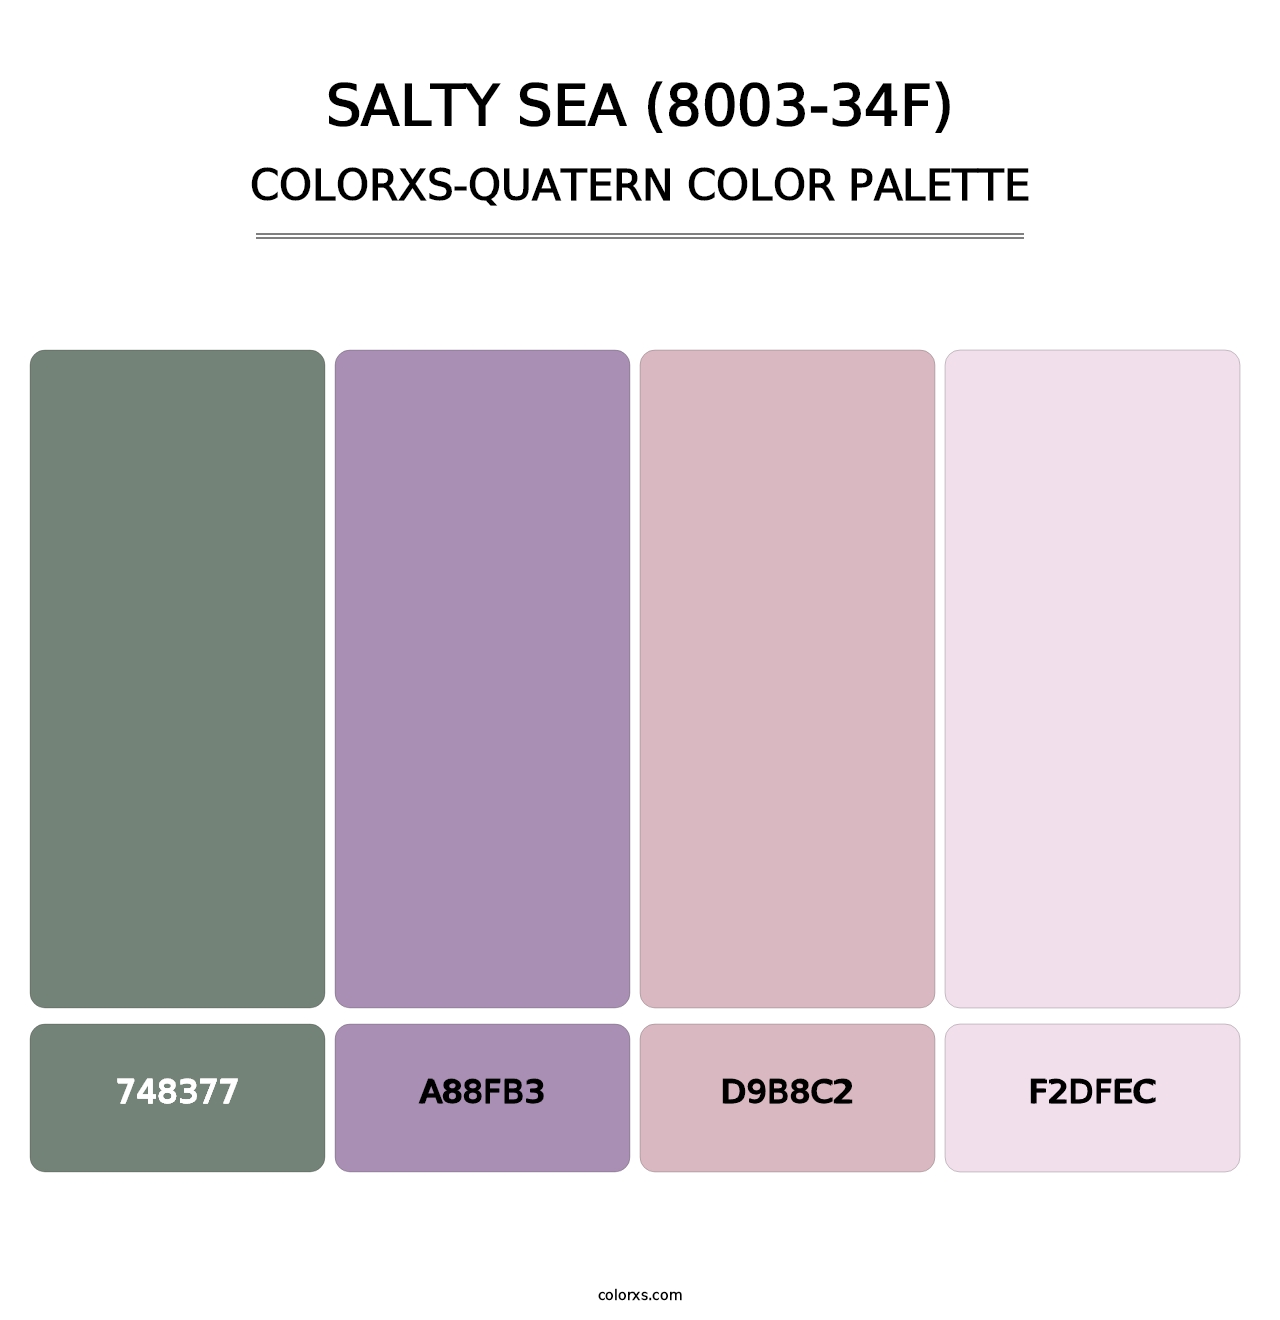 Salty Sea (8003-34F) - Colorxs Quatern Palette